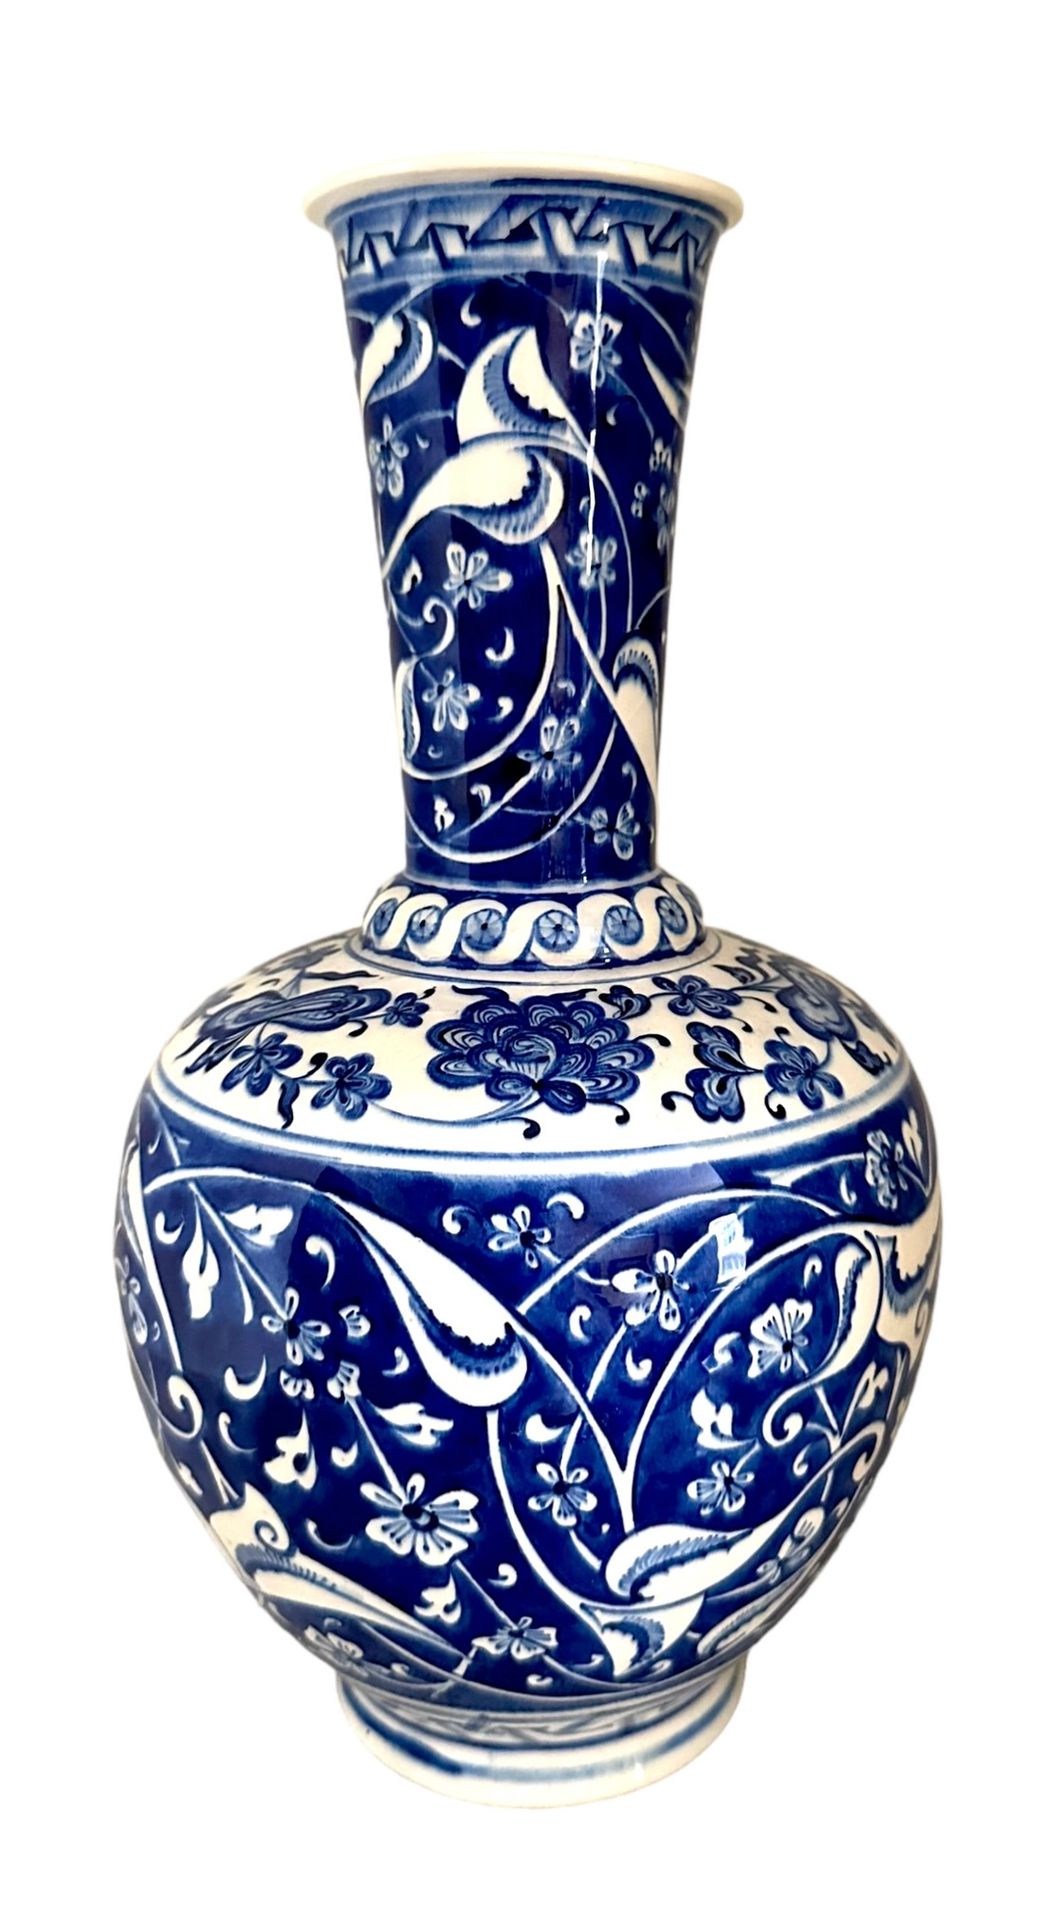 Adil Var Signed Ceramic Vase Ceramica blu e bianca con decorazione floreale, 200&hellip;